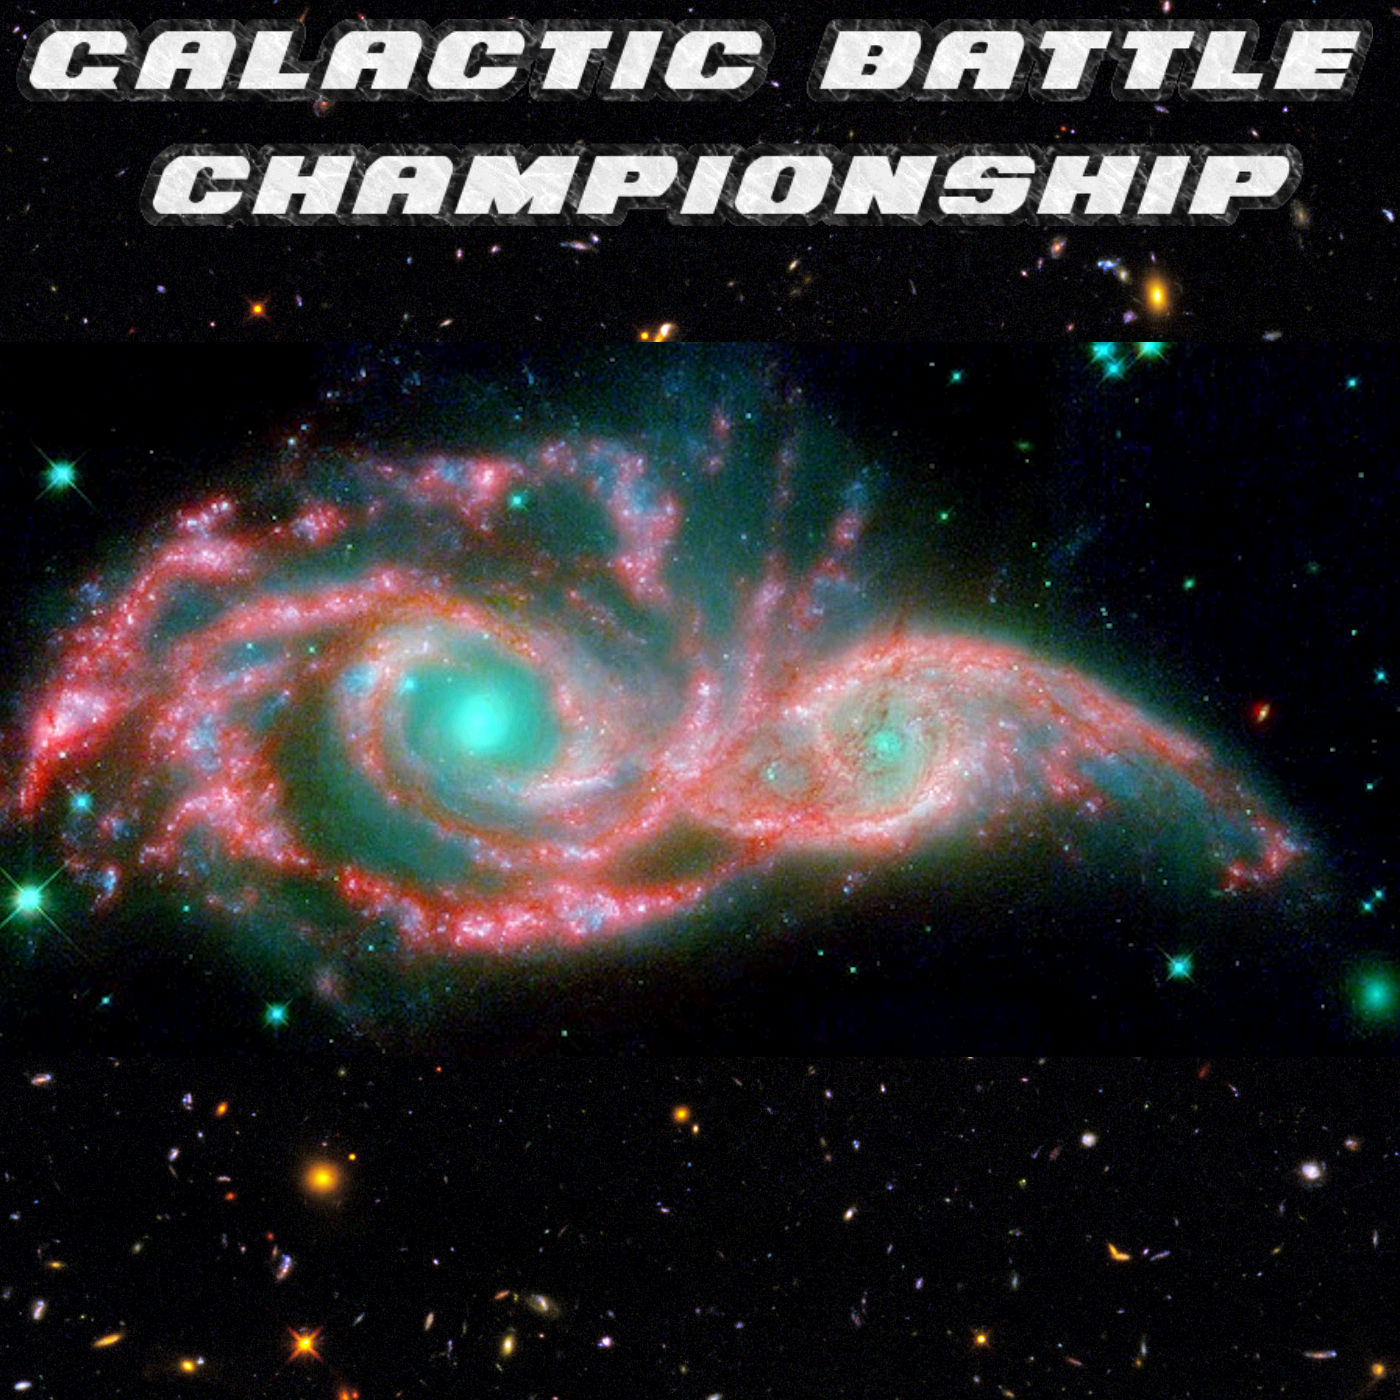 Galactic Battle Championship - Episode 2 - Eerillia vs Doberman 451